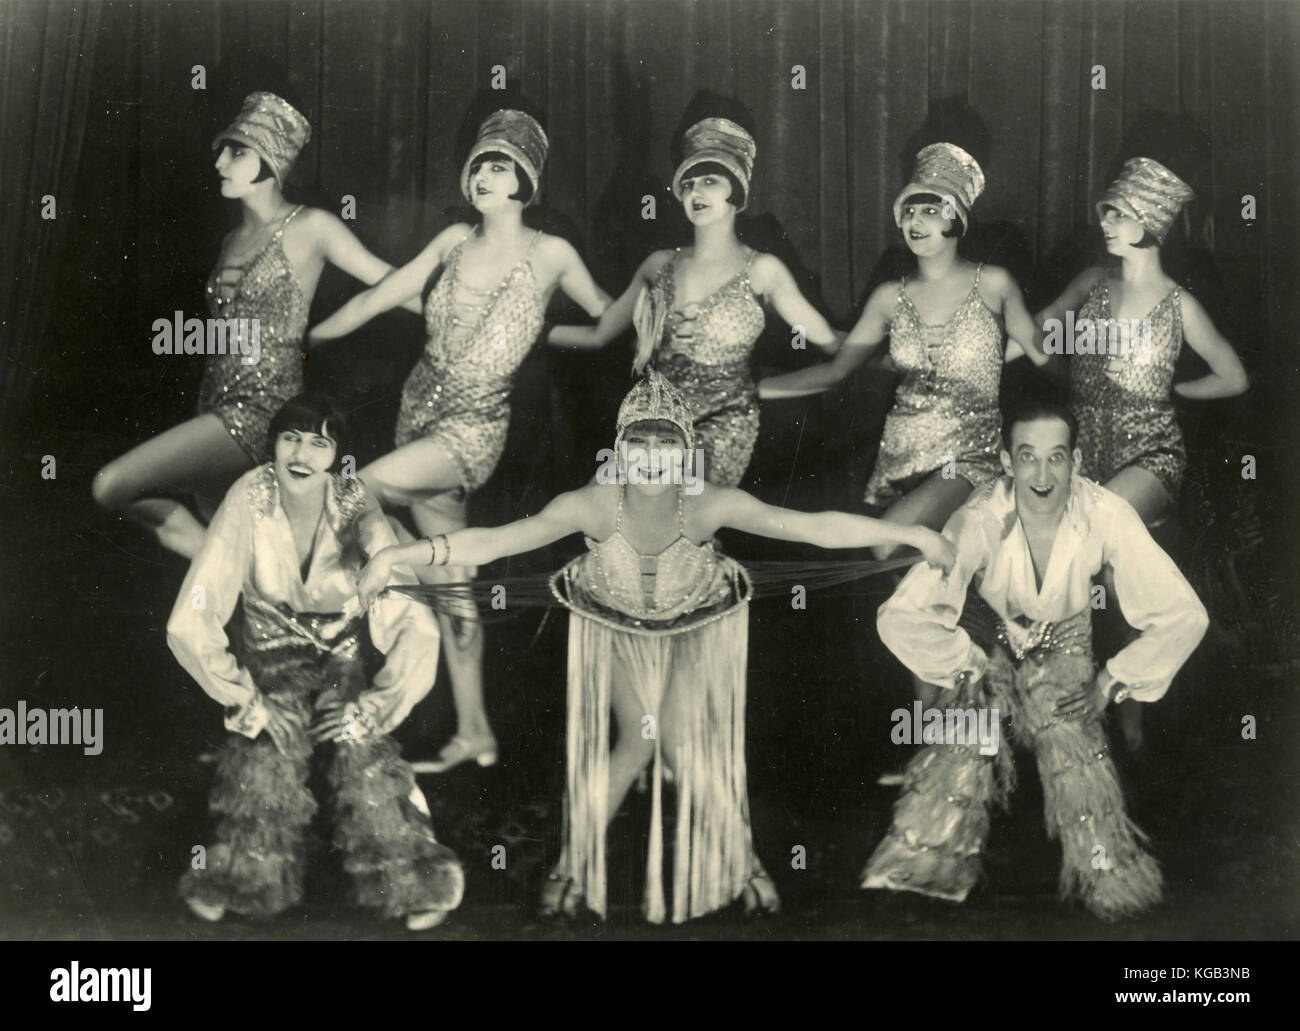 1930s Dance Costume | estudioespositoymiguel.com.ar